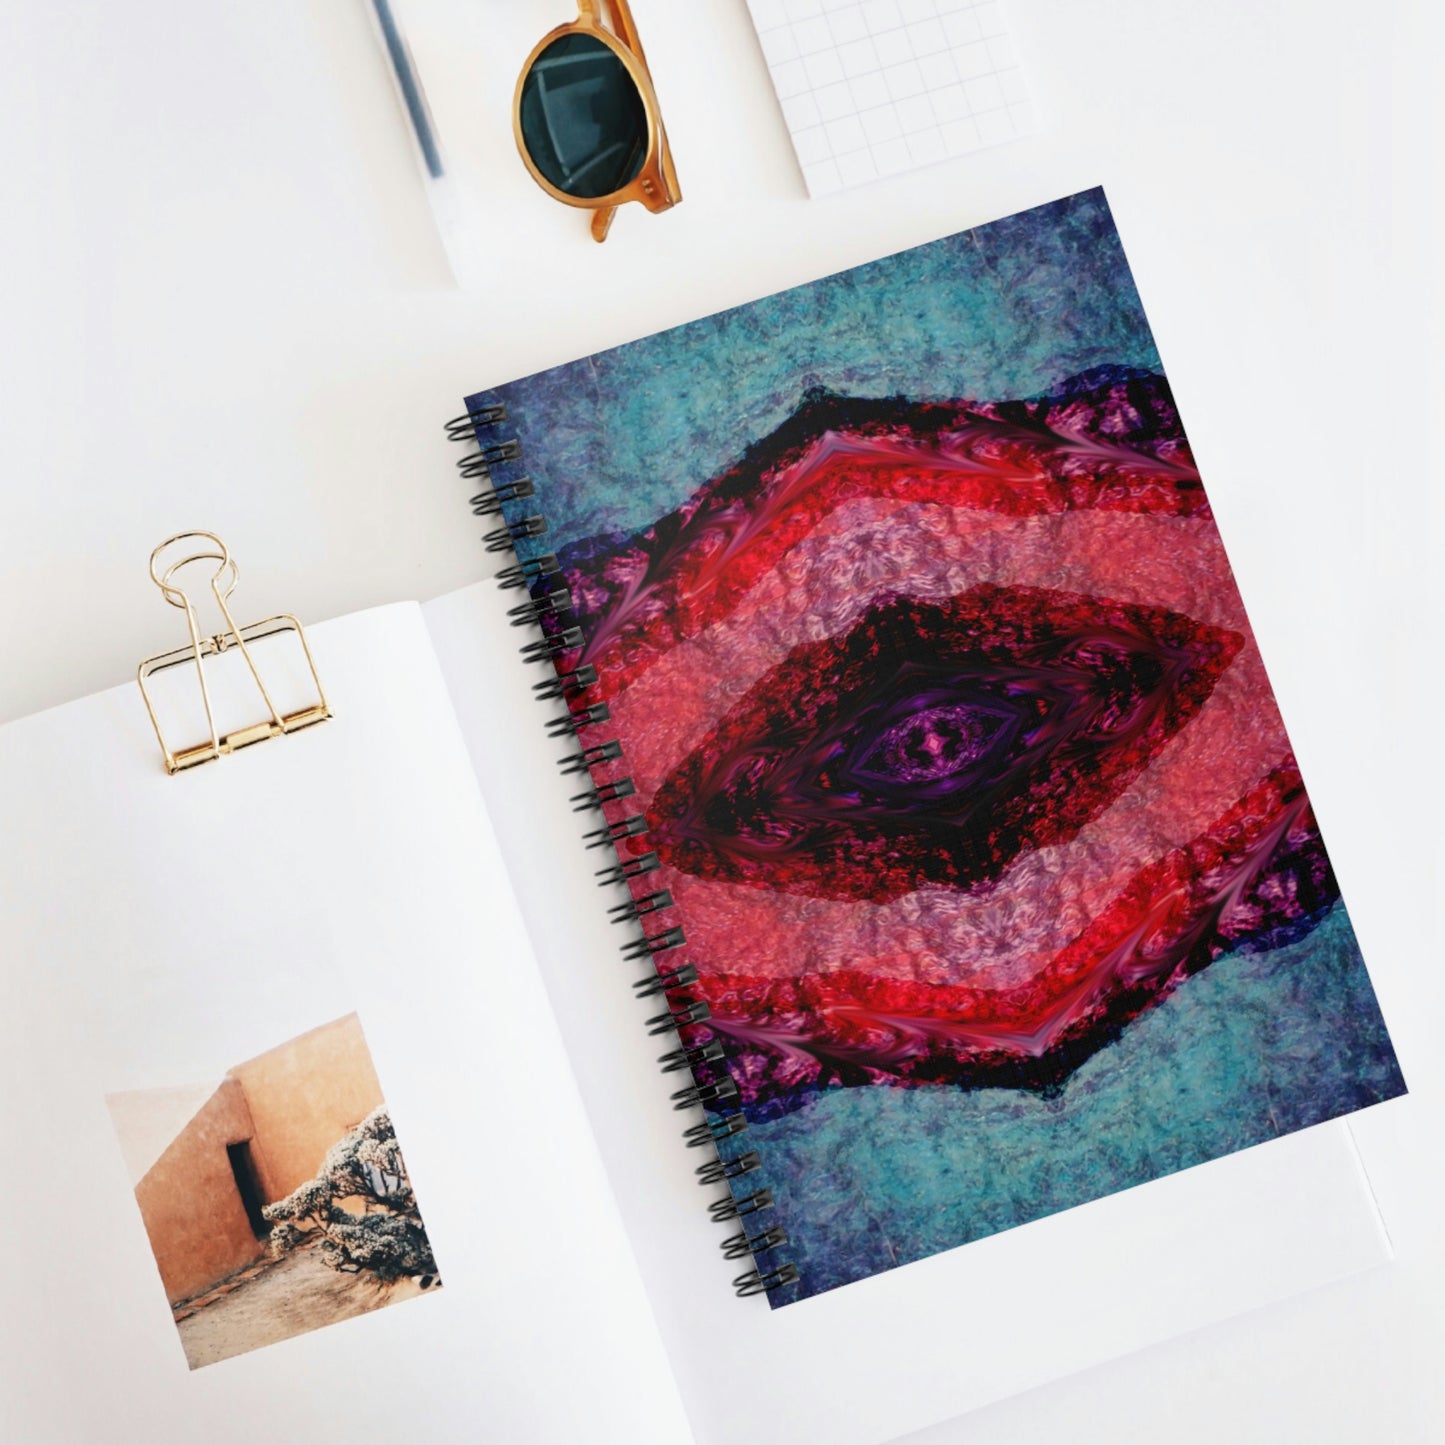 Purple Geode Spiral Notebook - Ruled Line